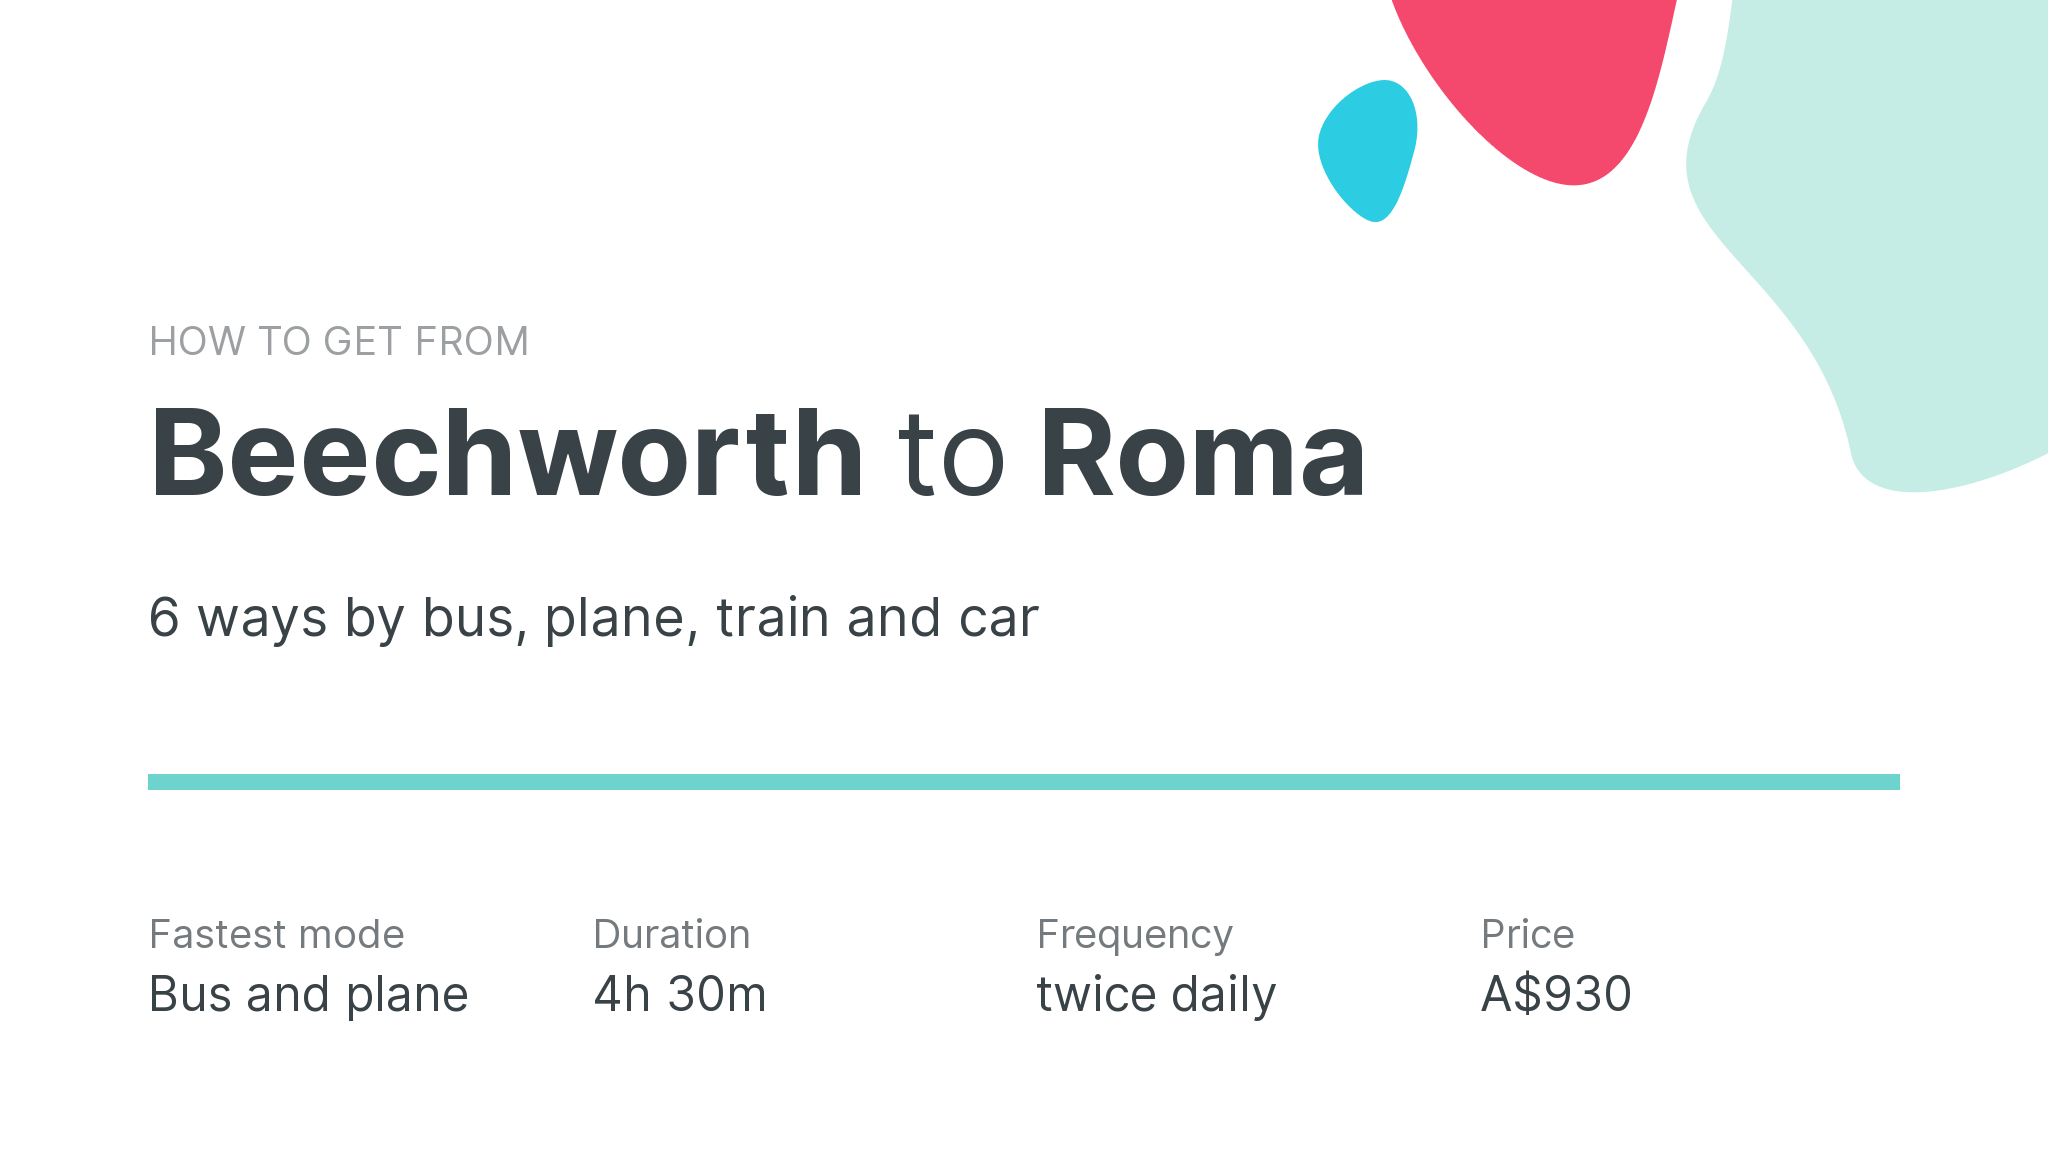 How do I get from Beechworth to Roma